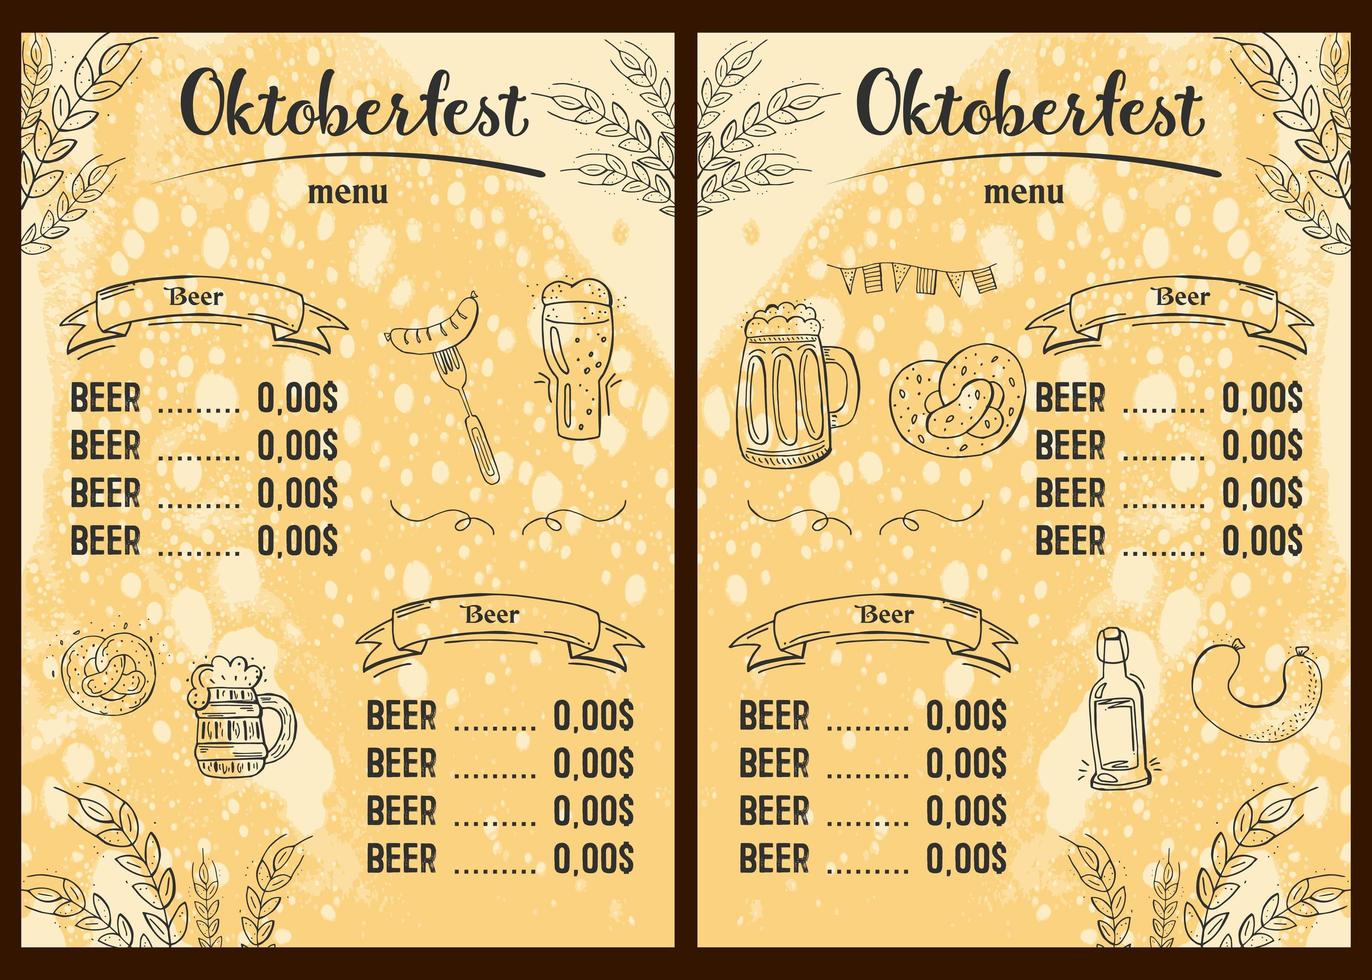 Oktoberfest 2022 - Beer Festival. Hand-drawn Doodle Elements. German Traditional holiday. Octoberfest, Craft Beer. Blue-white rhombus. Vertical Beer Menu. vector